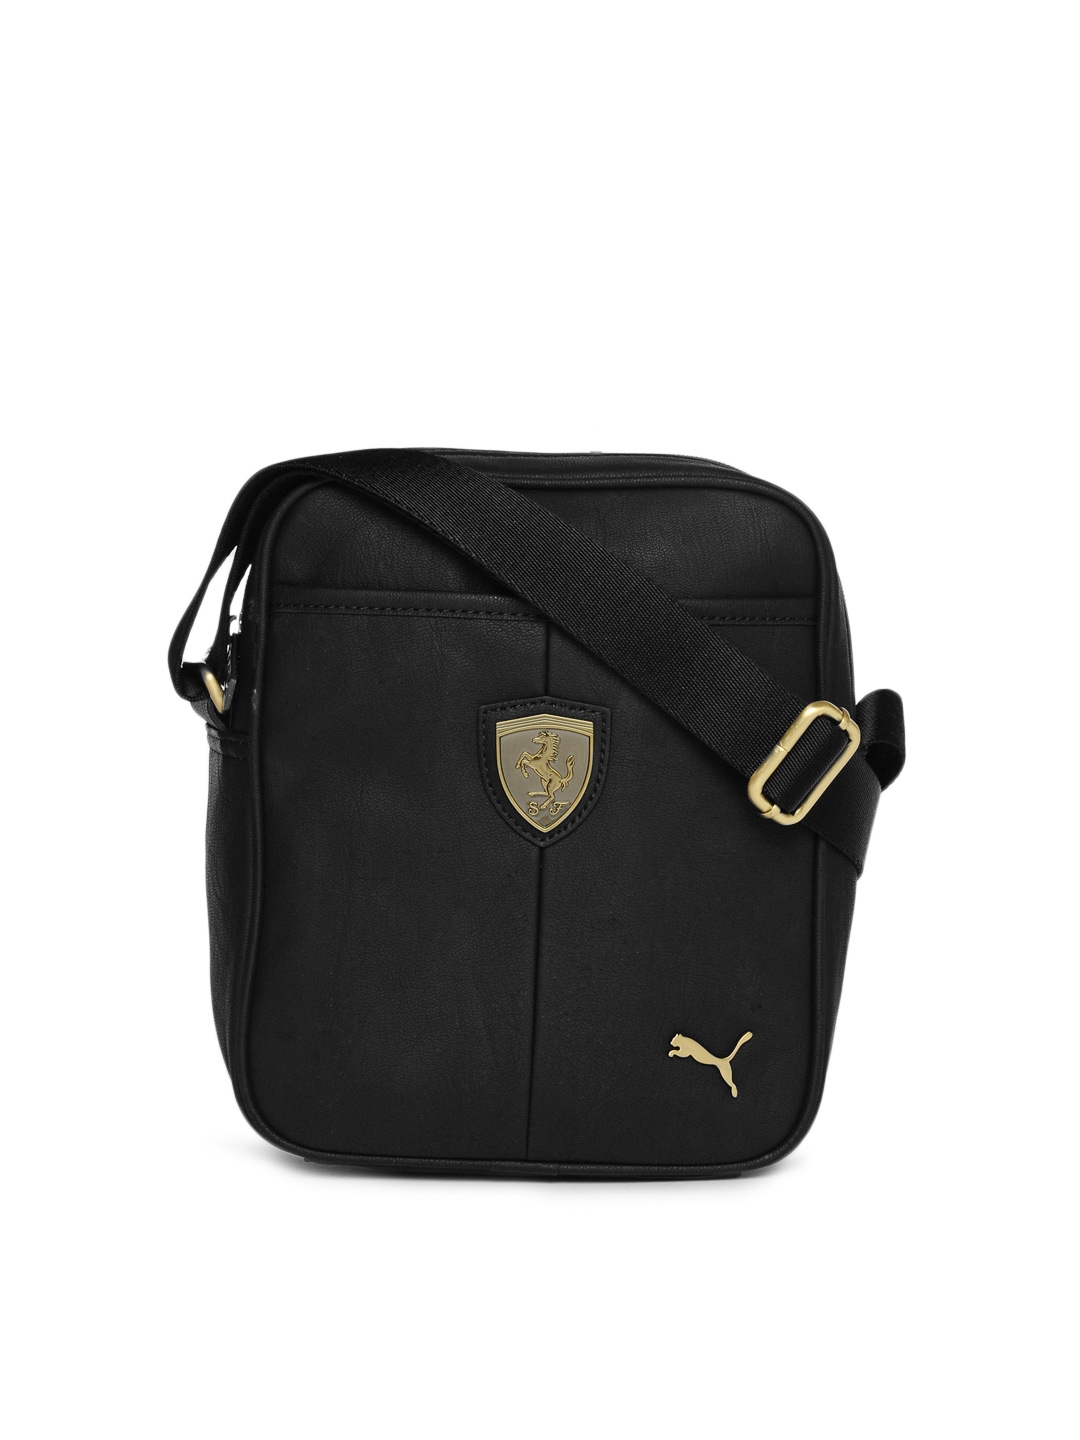 Buy Puma Unisex Black Sling Bag - Handbags for Unisex 60901 | Myntra